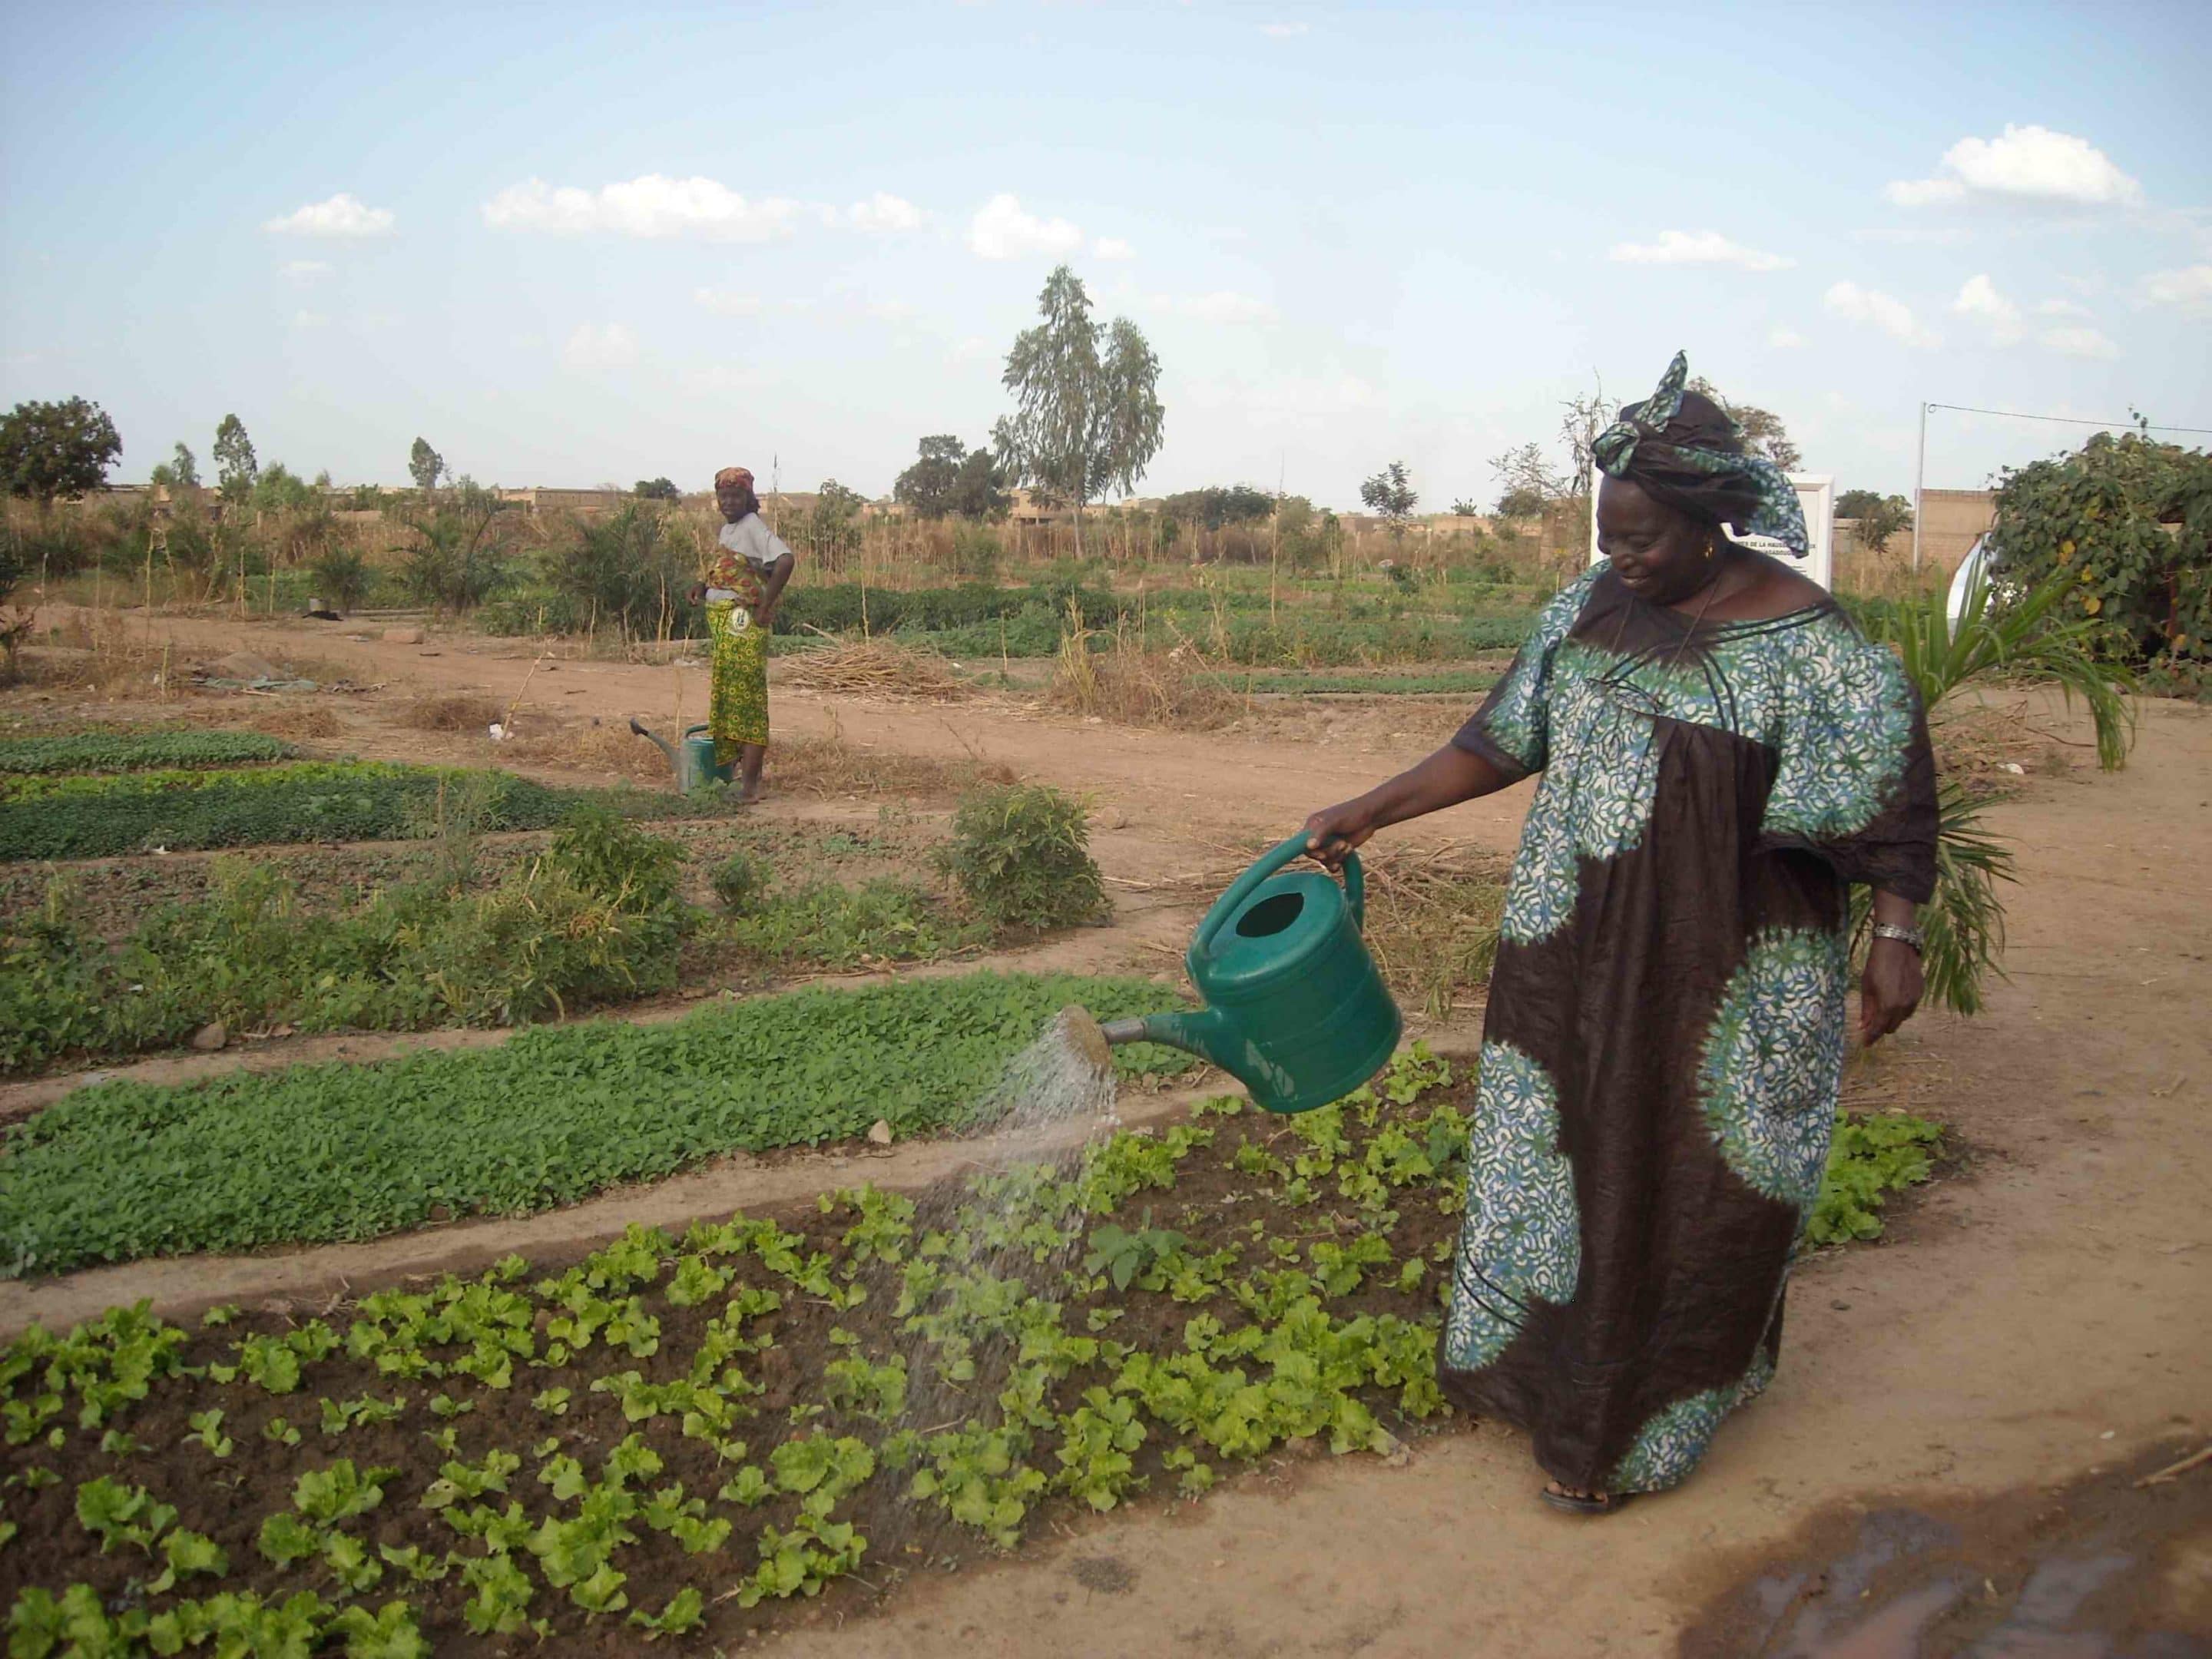 Gardening project for women in Burkina Faso